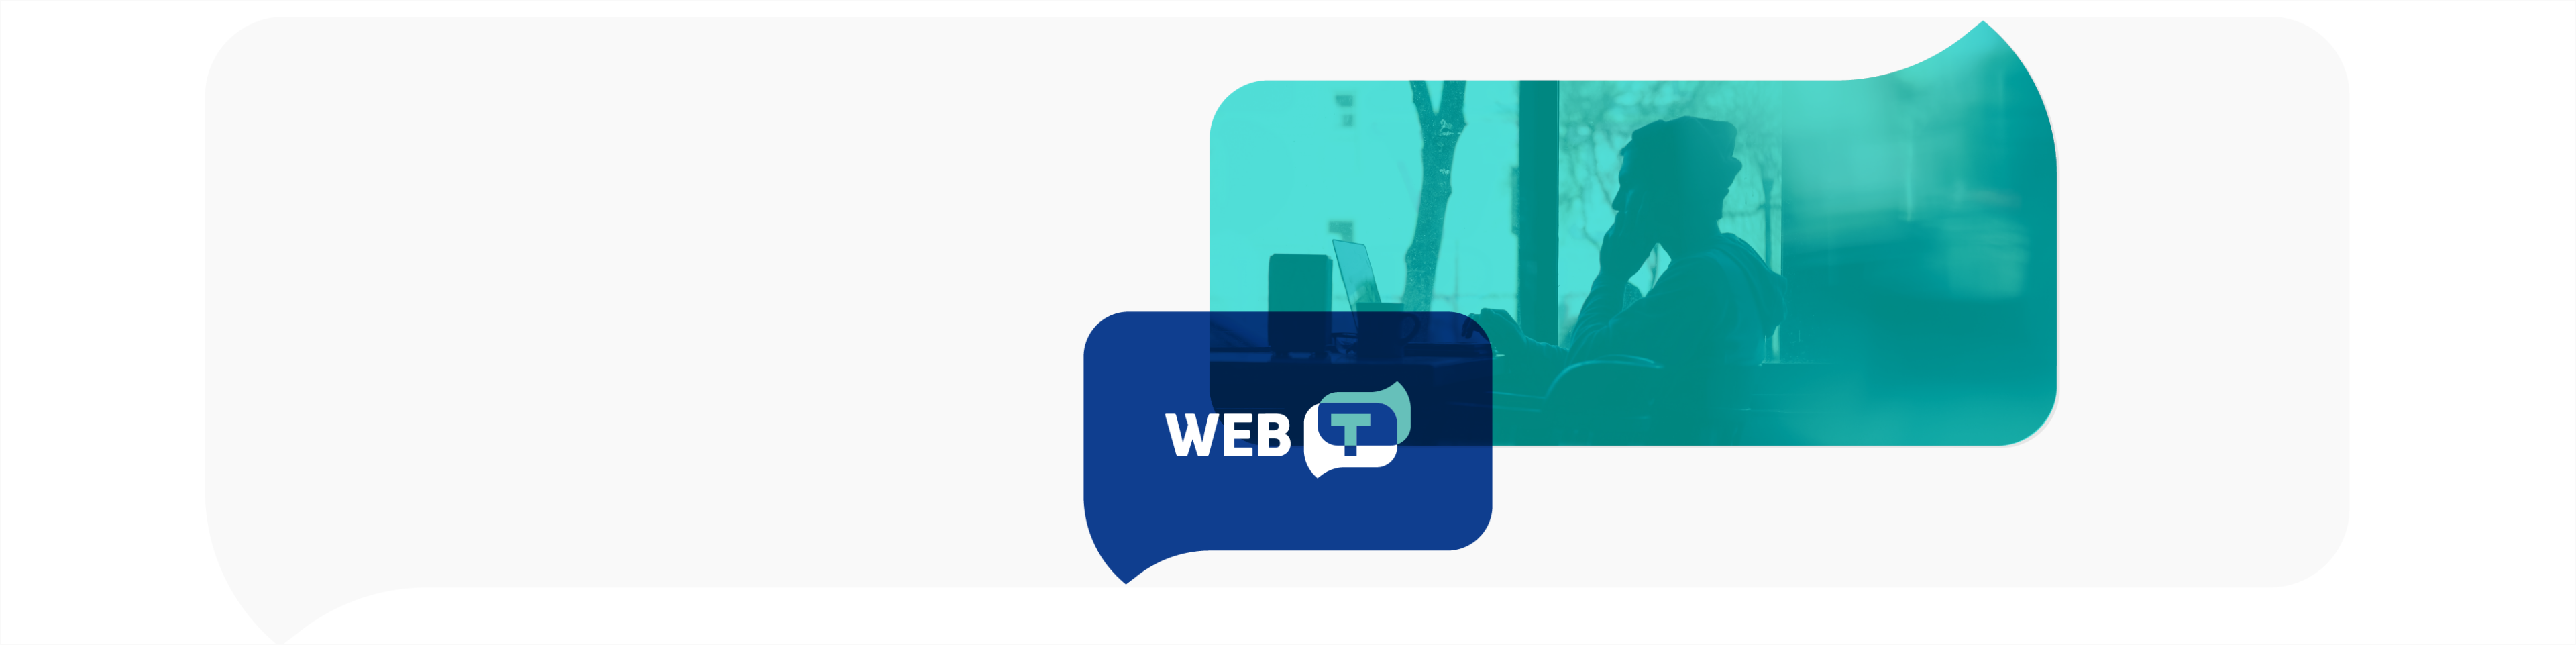 web-t logo banner